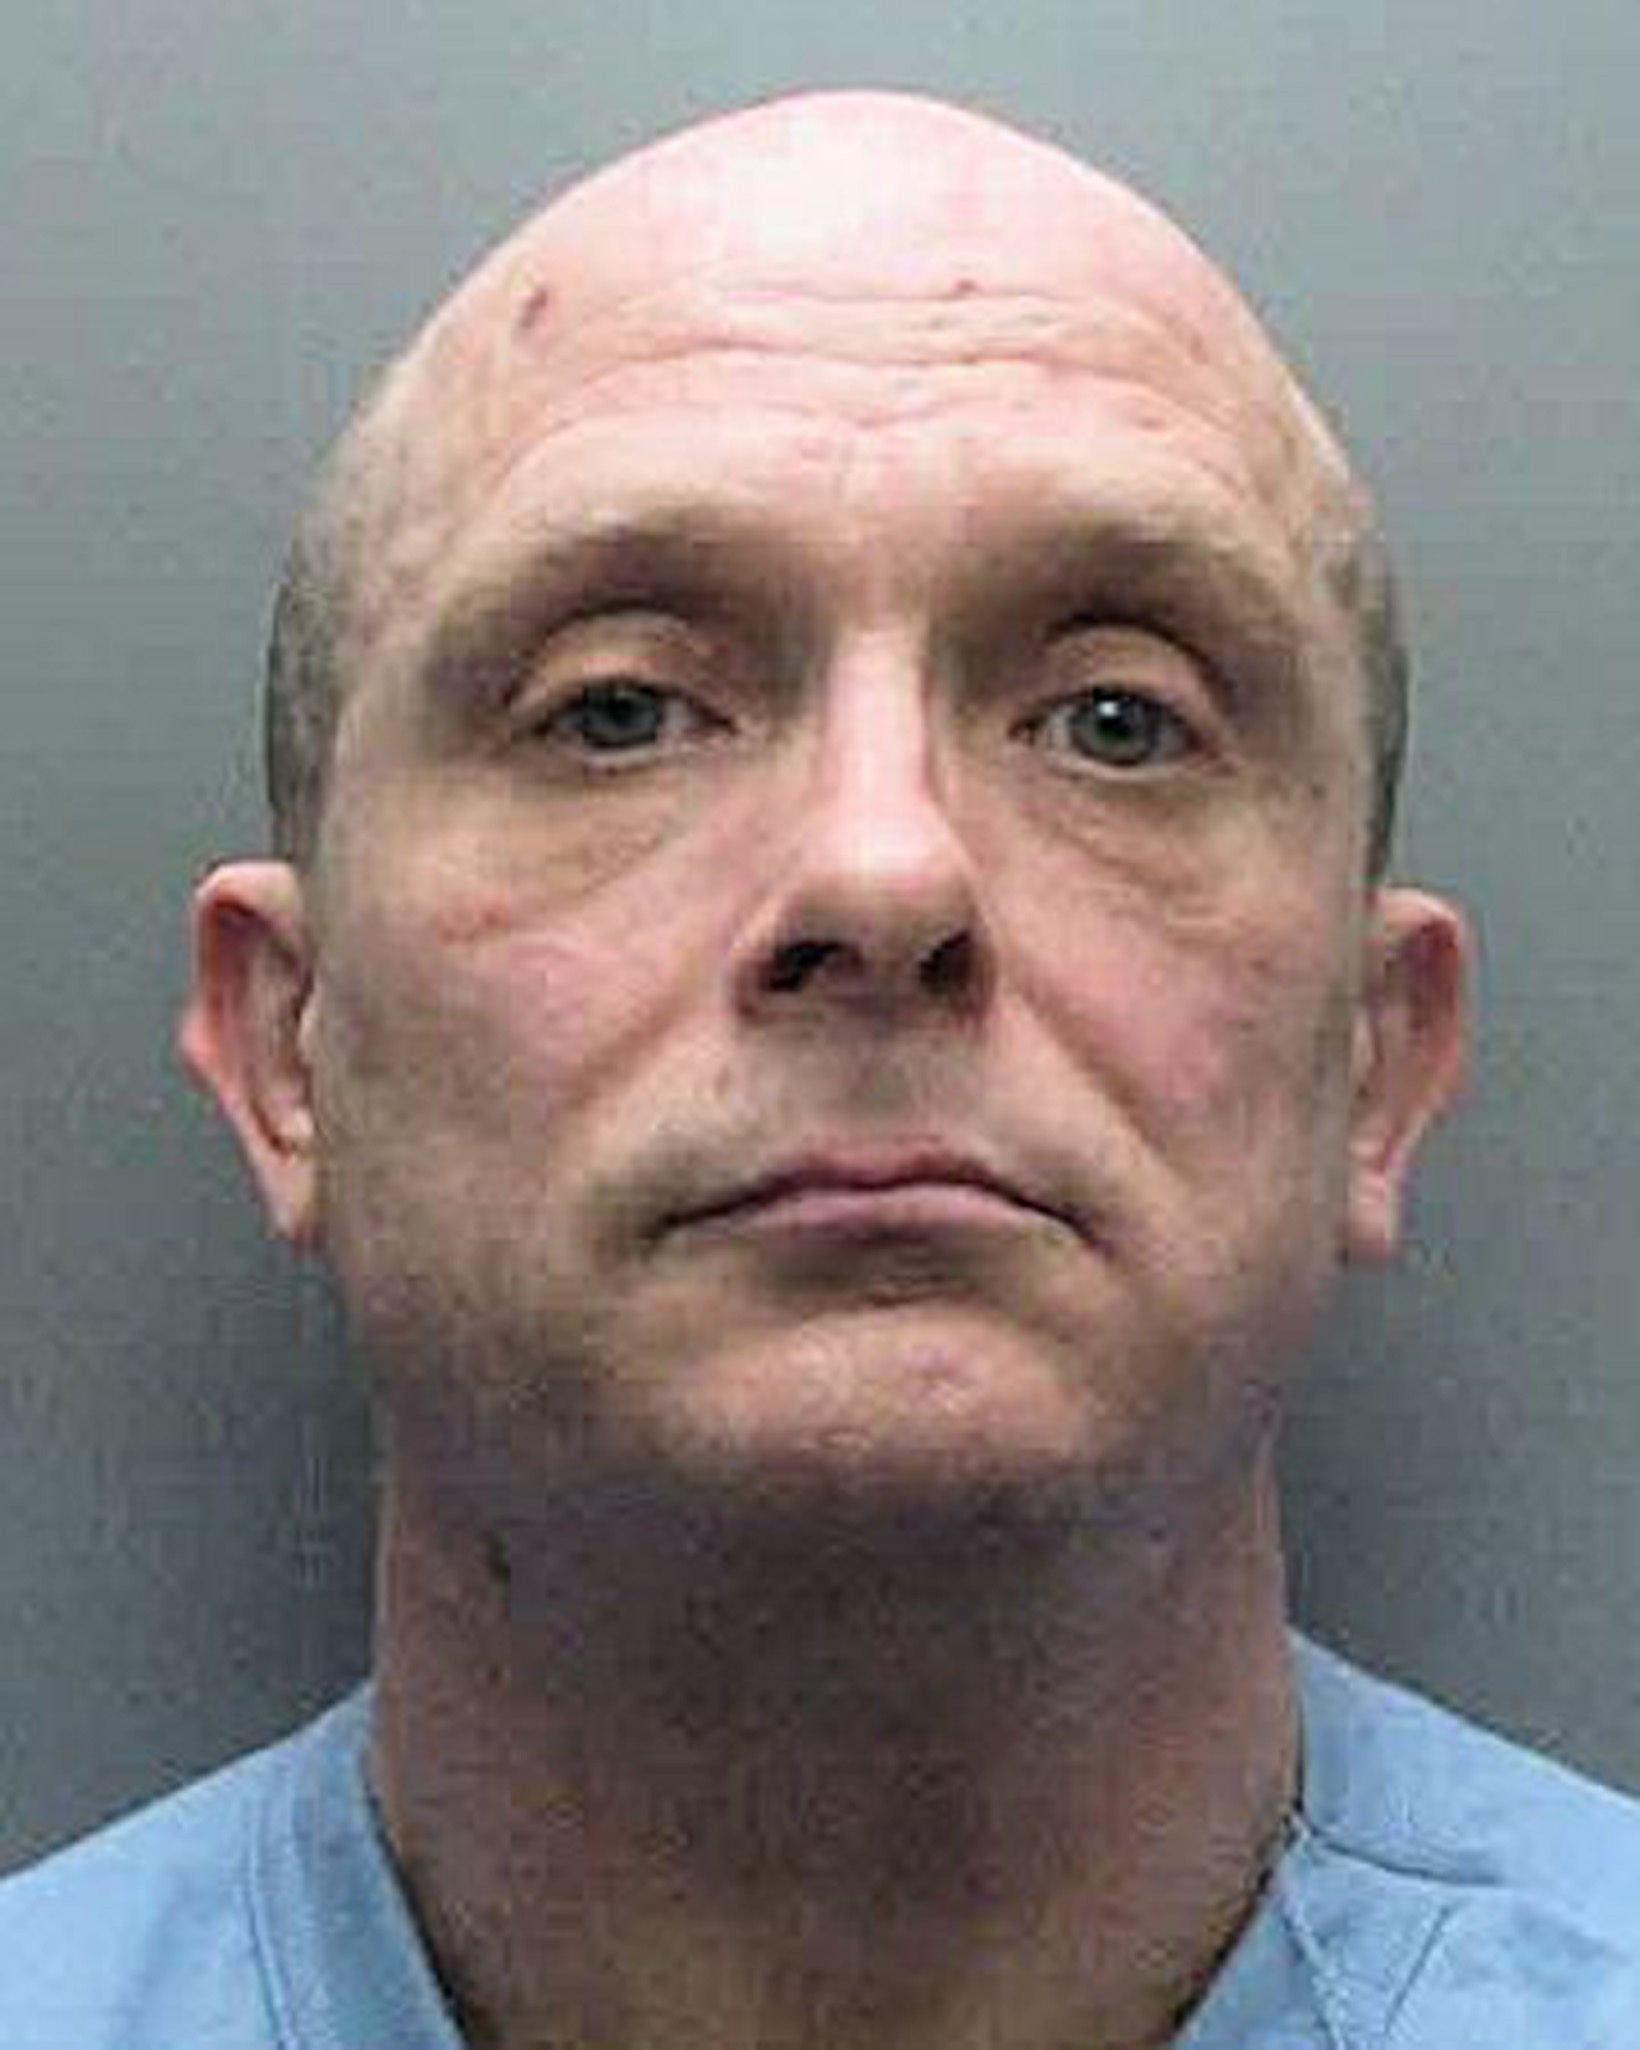 Russell Bishop, who was found guilty of the 1986 ‘Babes in Wood’ murders of schoolgirls Nicola Fellows and Karen Hadaway